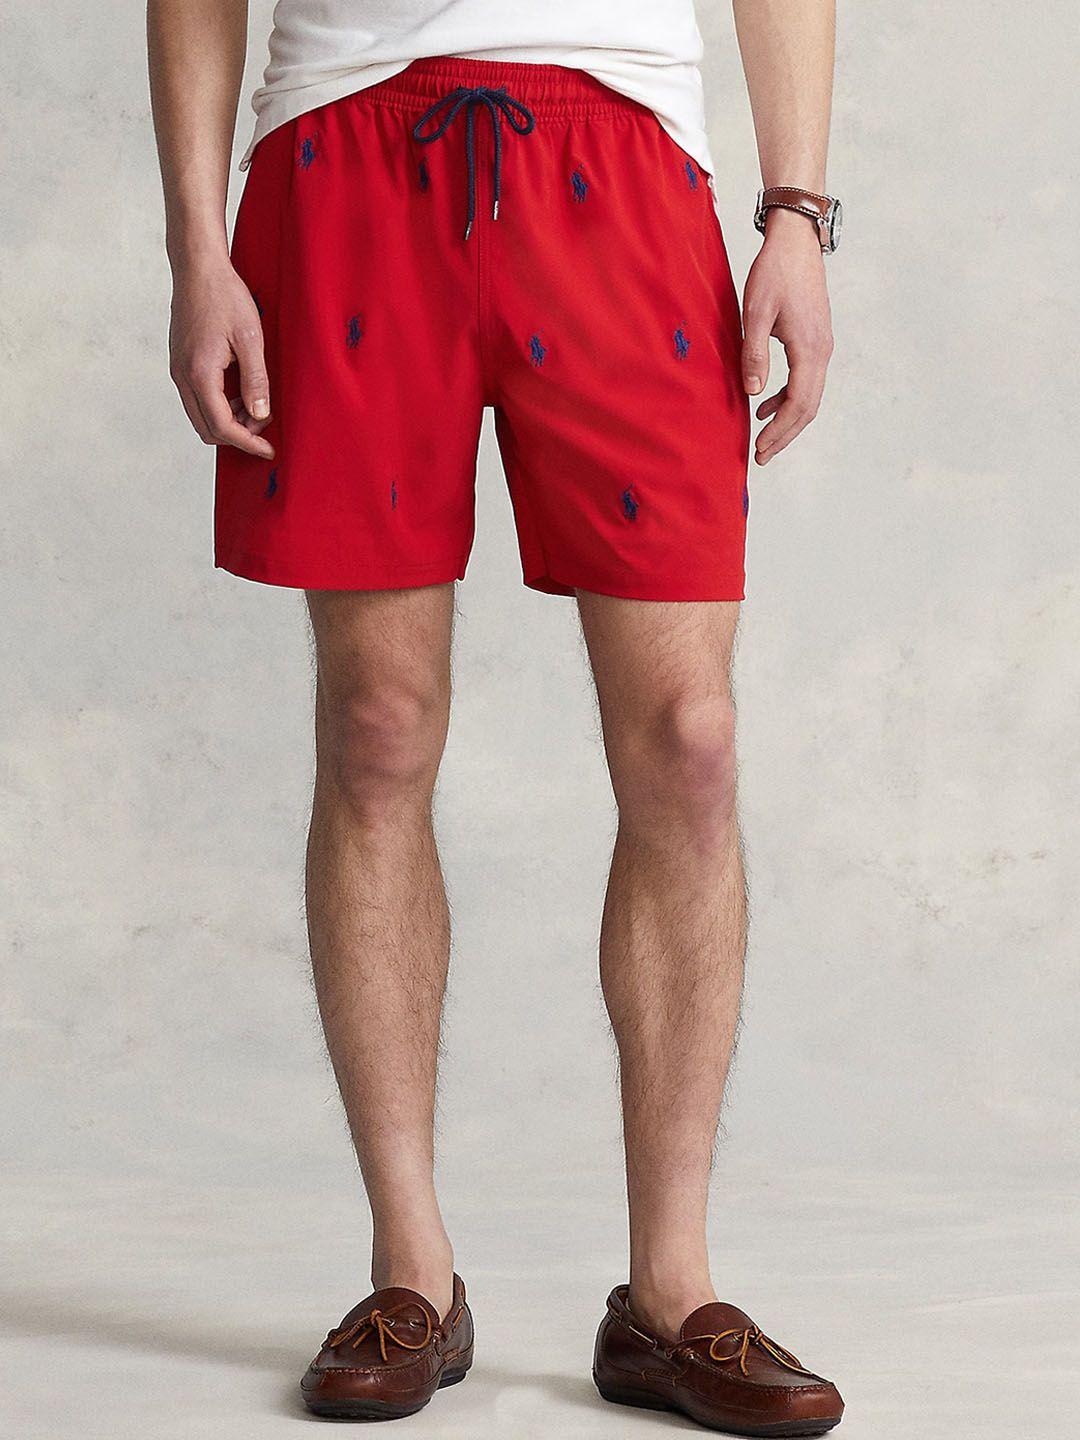 polo ralph lauren men conversational printed cotton swim trunk shorts